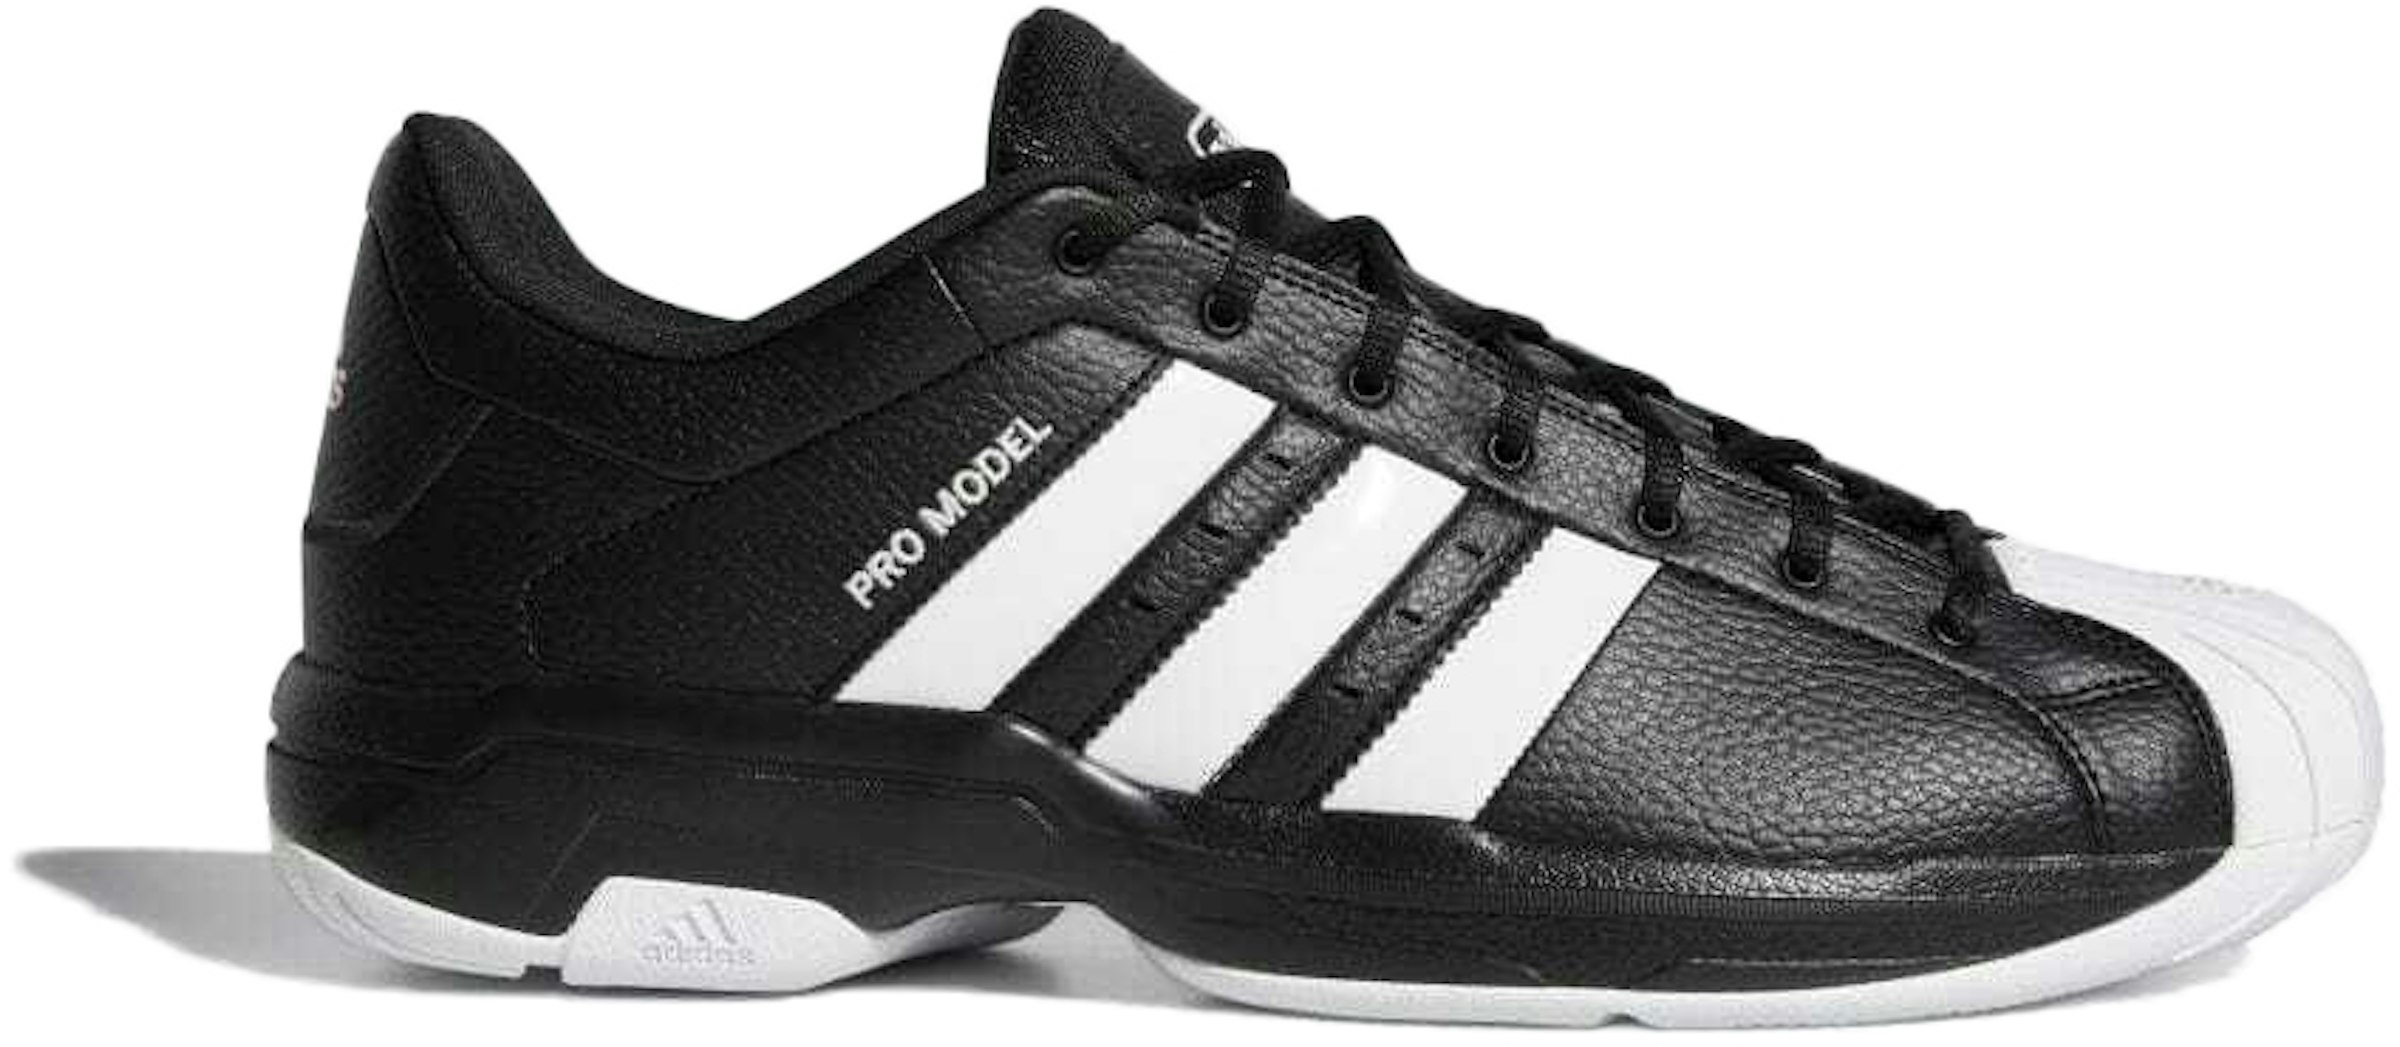 Adidas Pro Model 2g Low Men's Basketball Shoes Rogan's, 48% OFF